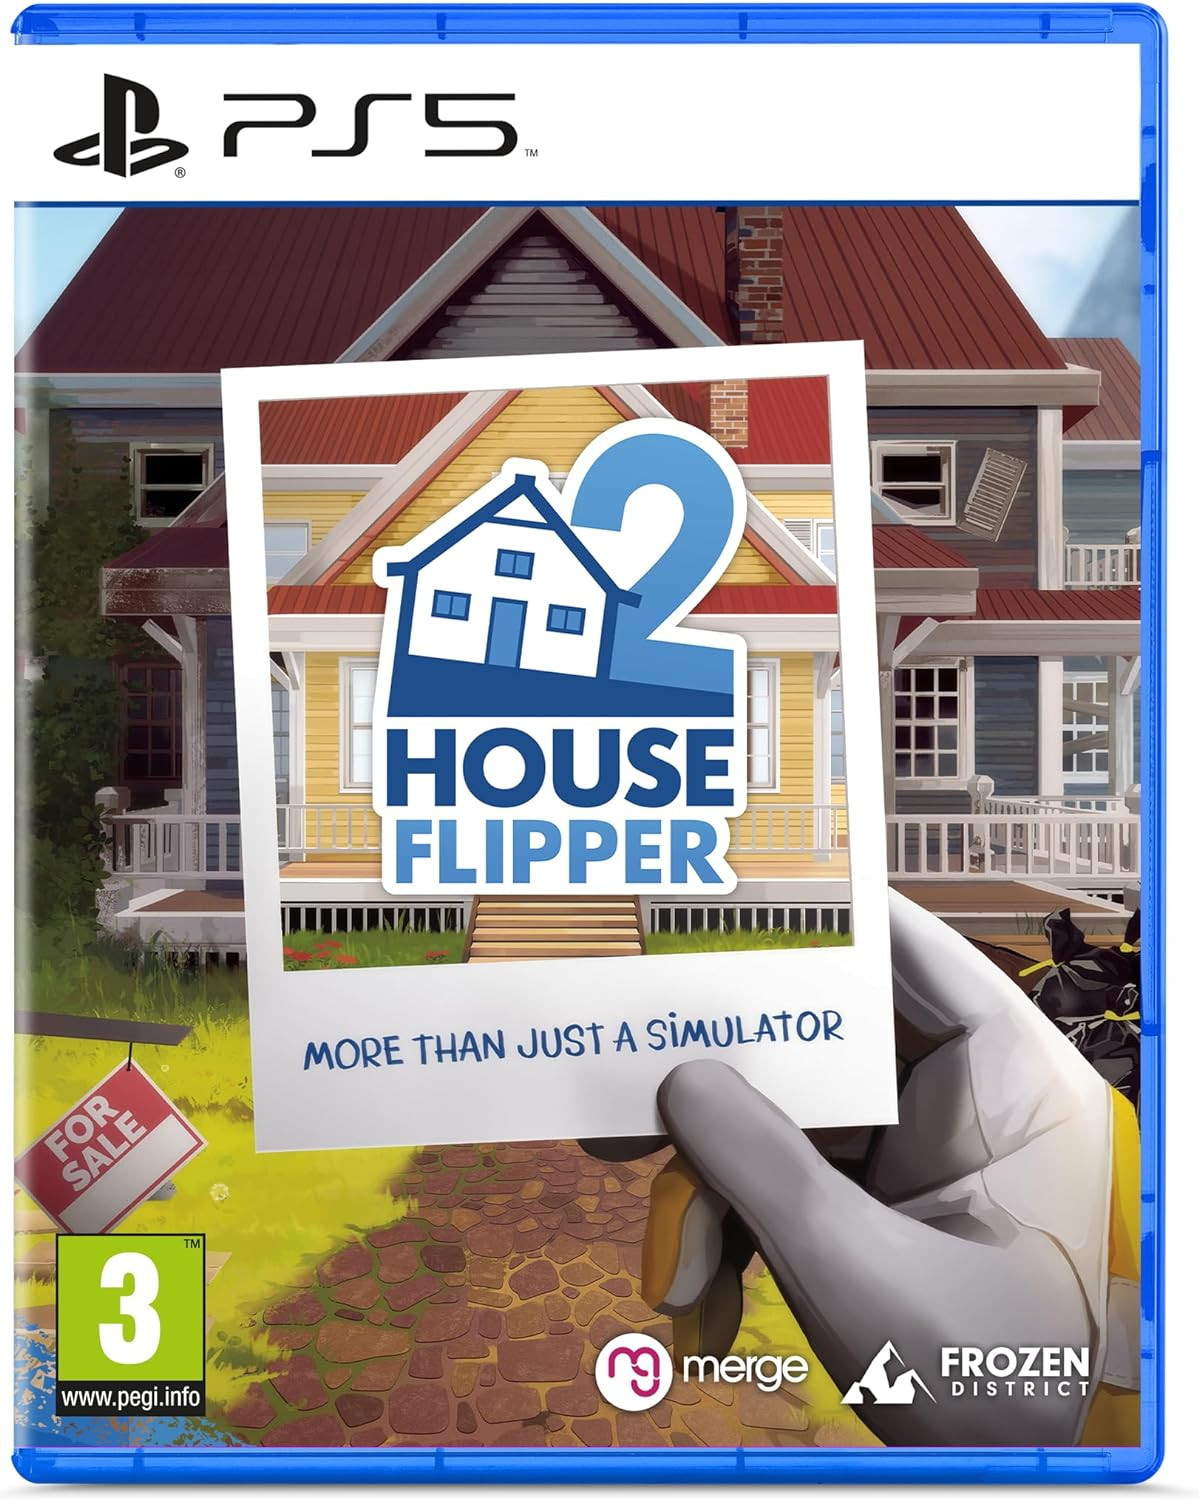 mergegames House Flipper 2 - Sony PlayStation 5 - Simulation - PEGI 3